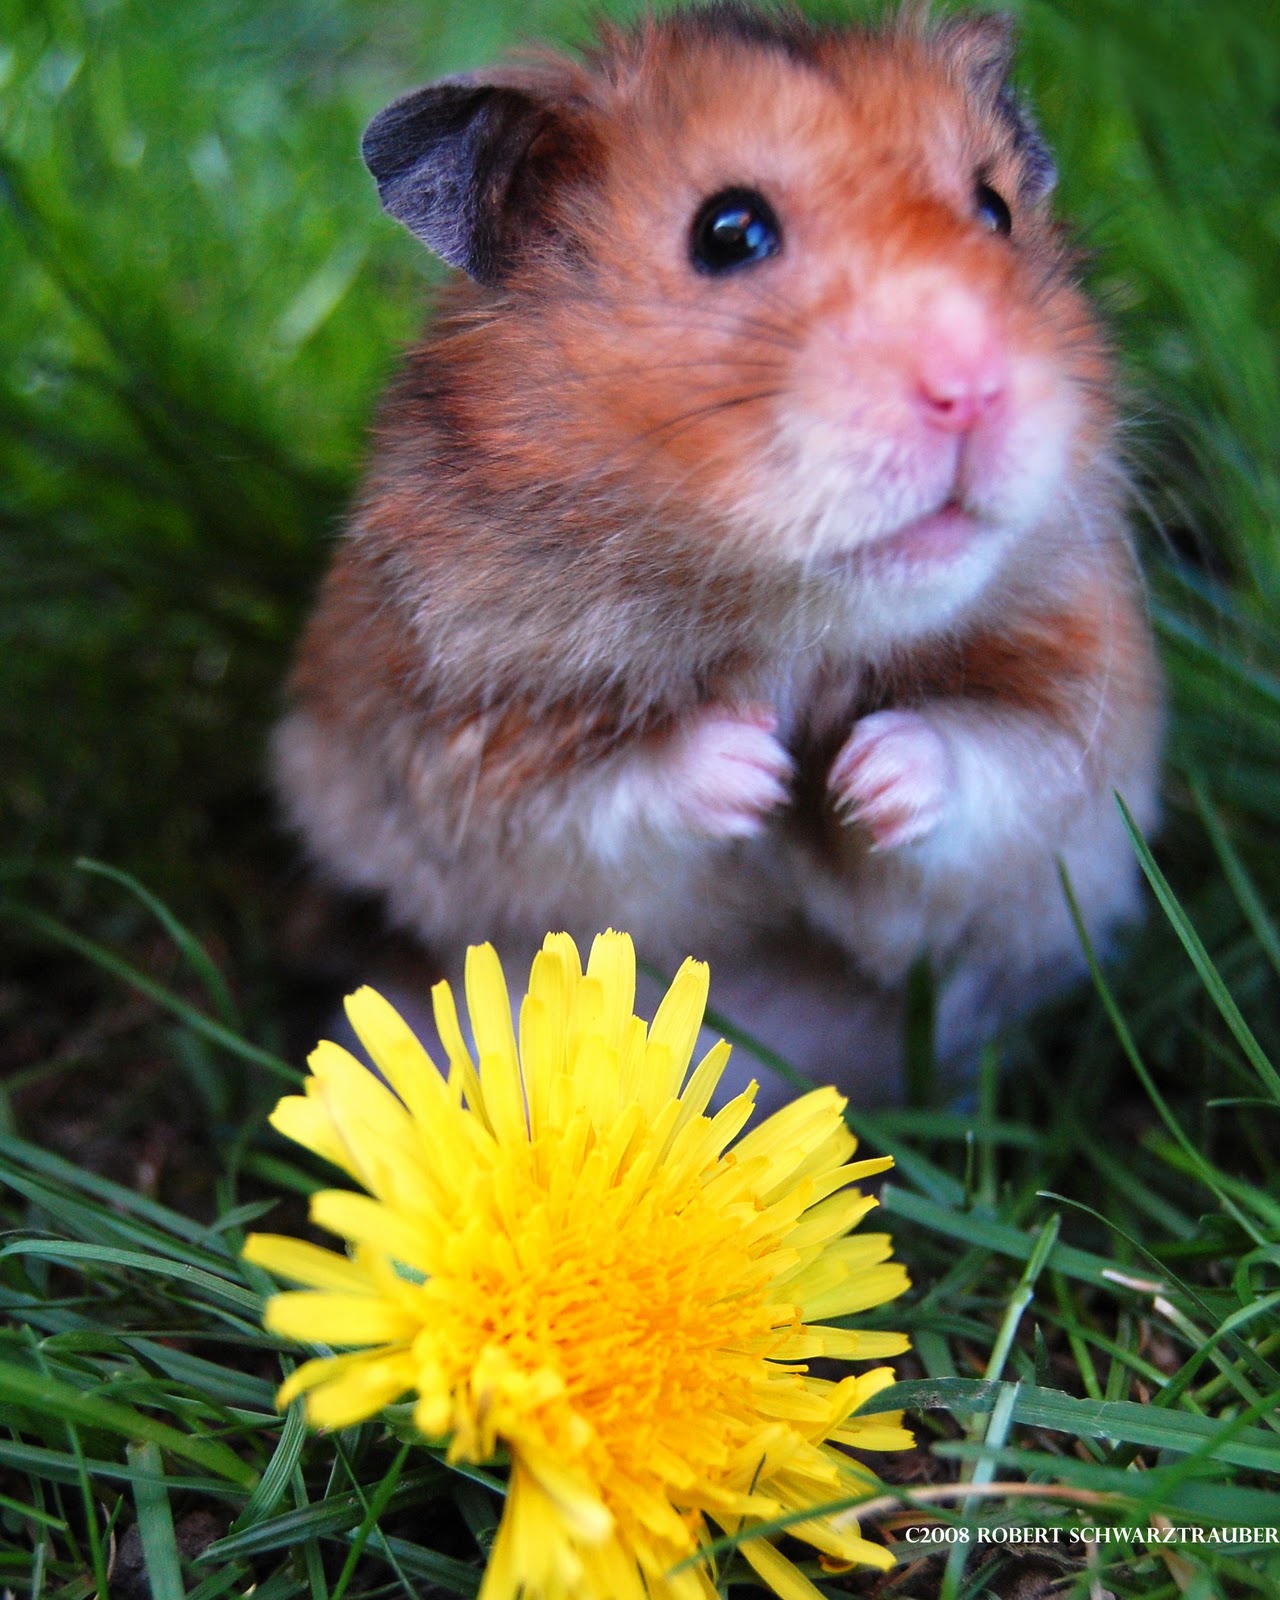 Cute Hamster And Sun Flower Wallpaper